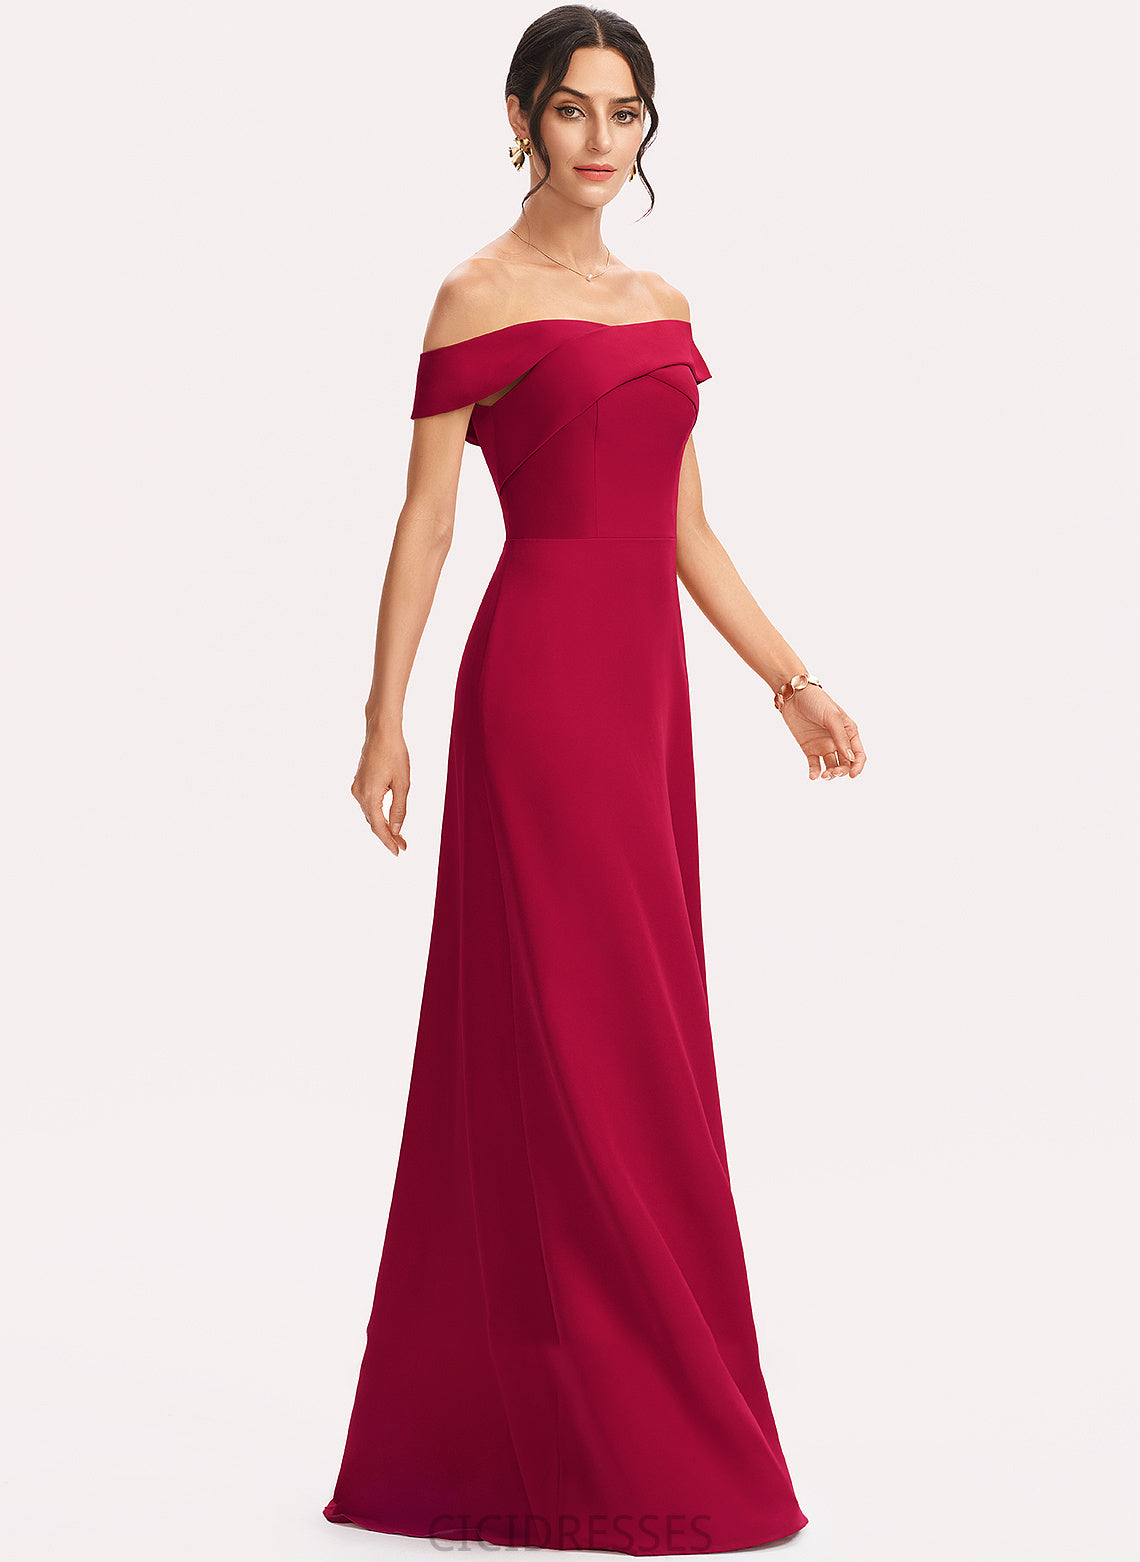 Neckline Silhouette Embellishment Floor-Length Off-the-Shoulder Fabric Sheath/Column Ruffle Length Emma Natural Waist Floor Length Bridesmaid Dresses